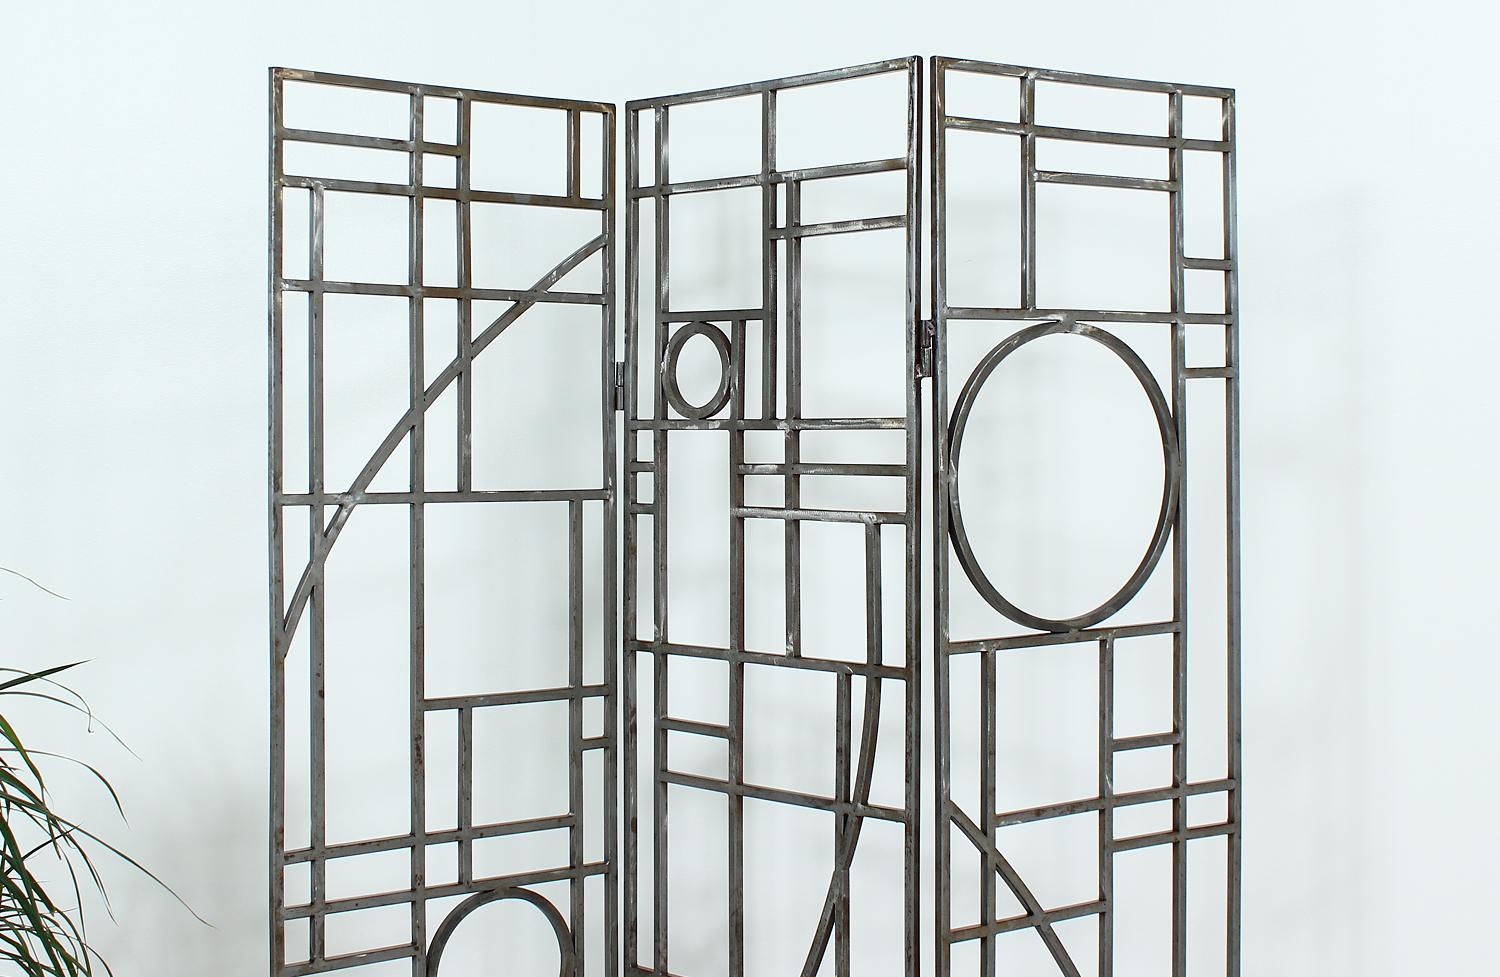 Late 20th Century Post-Modern Geometric Folding Room Divider by Robert Sonneman